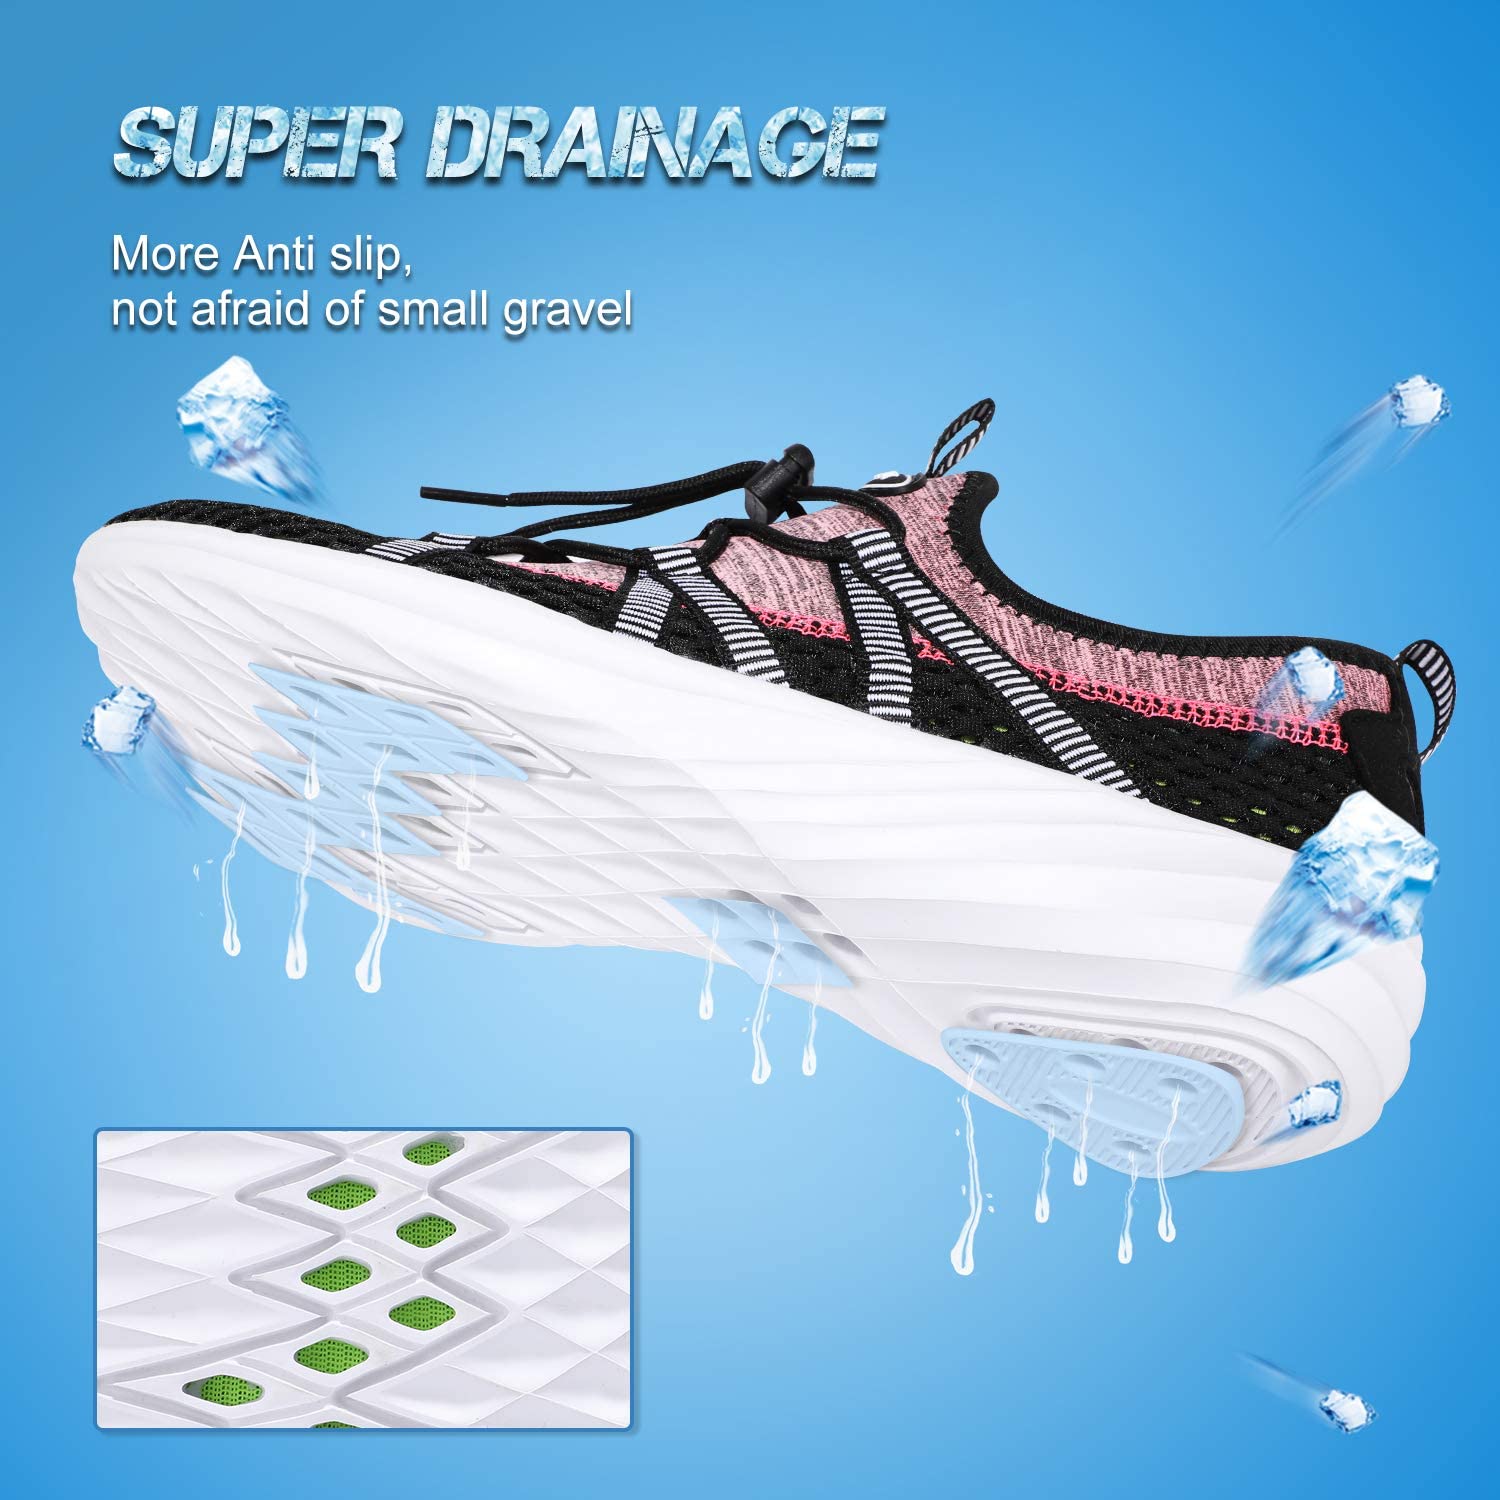 Vifuur Athletic Water Shoes for Men Vifuur